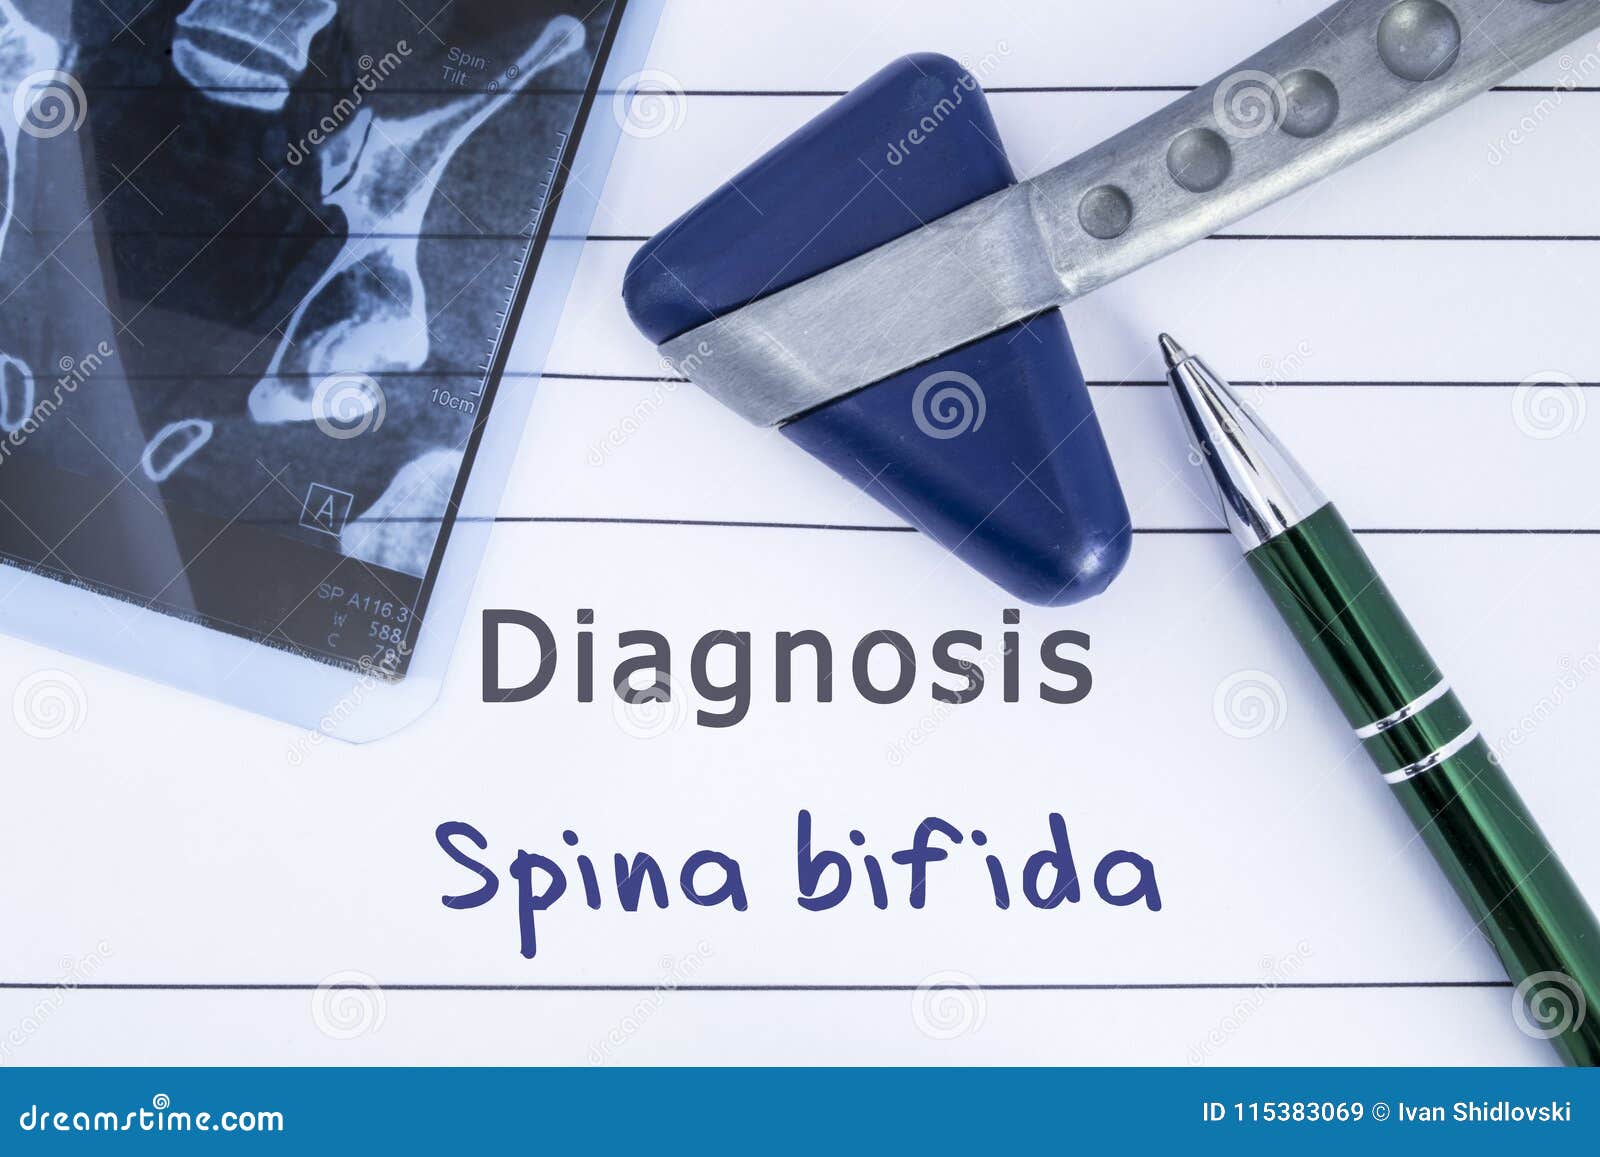 diagnosis of spina bifida. medical health history written with diagnosis of spina bifida, mri image sacral spine and neurological